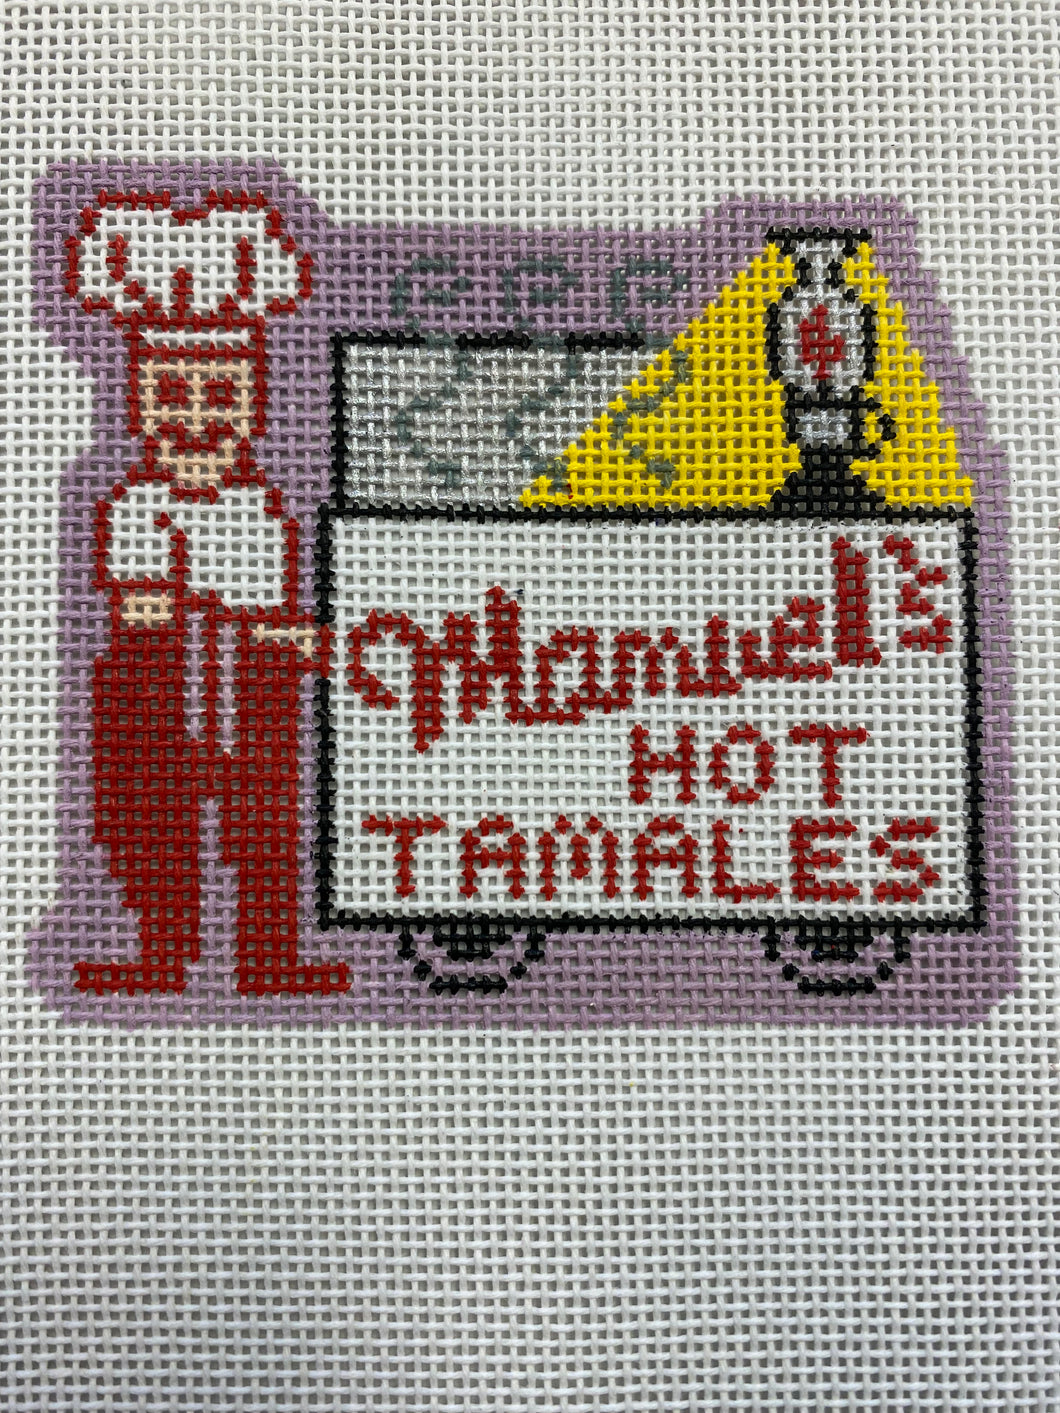 Manuel's Hot Tamales Needlepoint Ornament